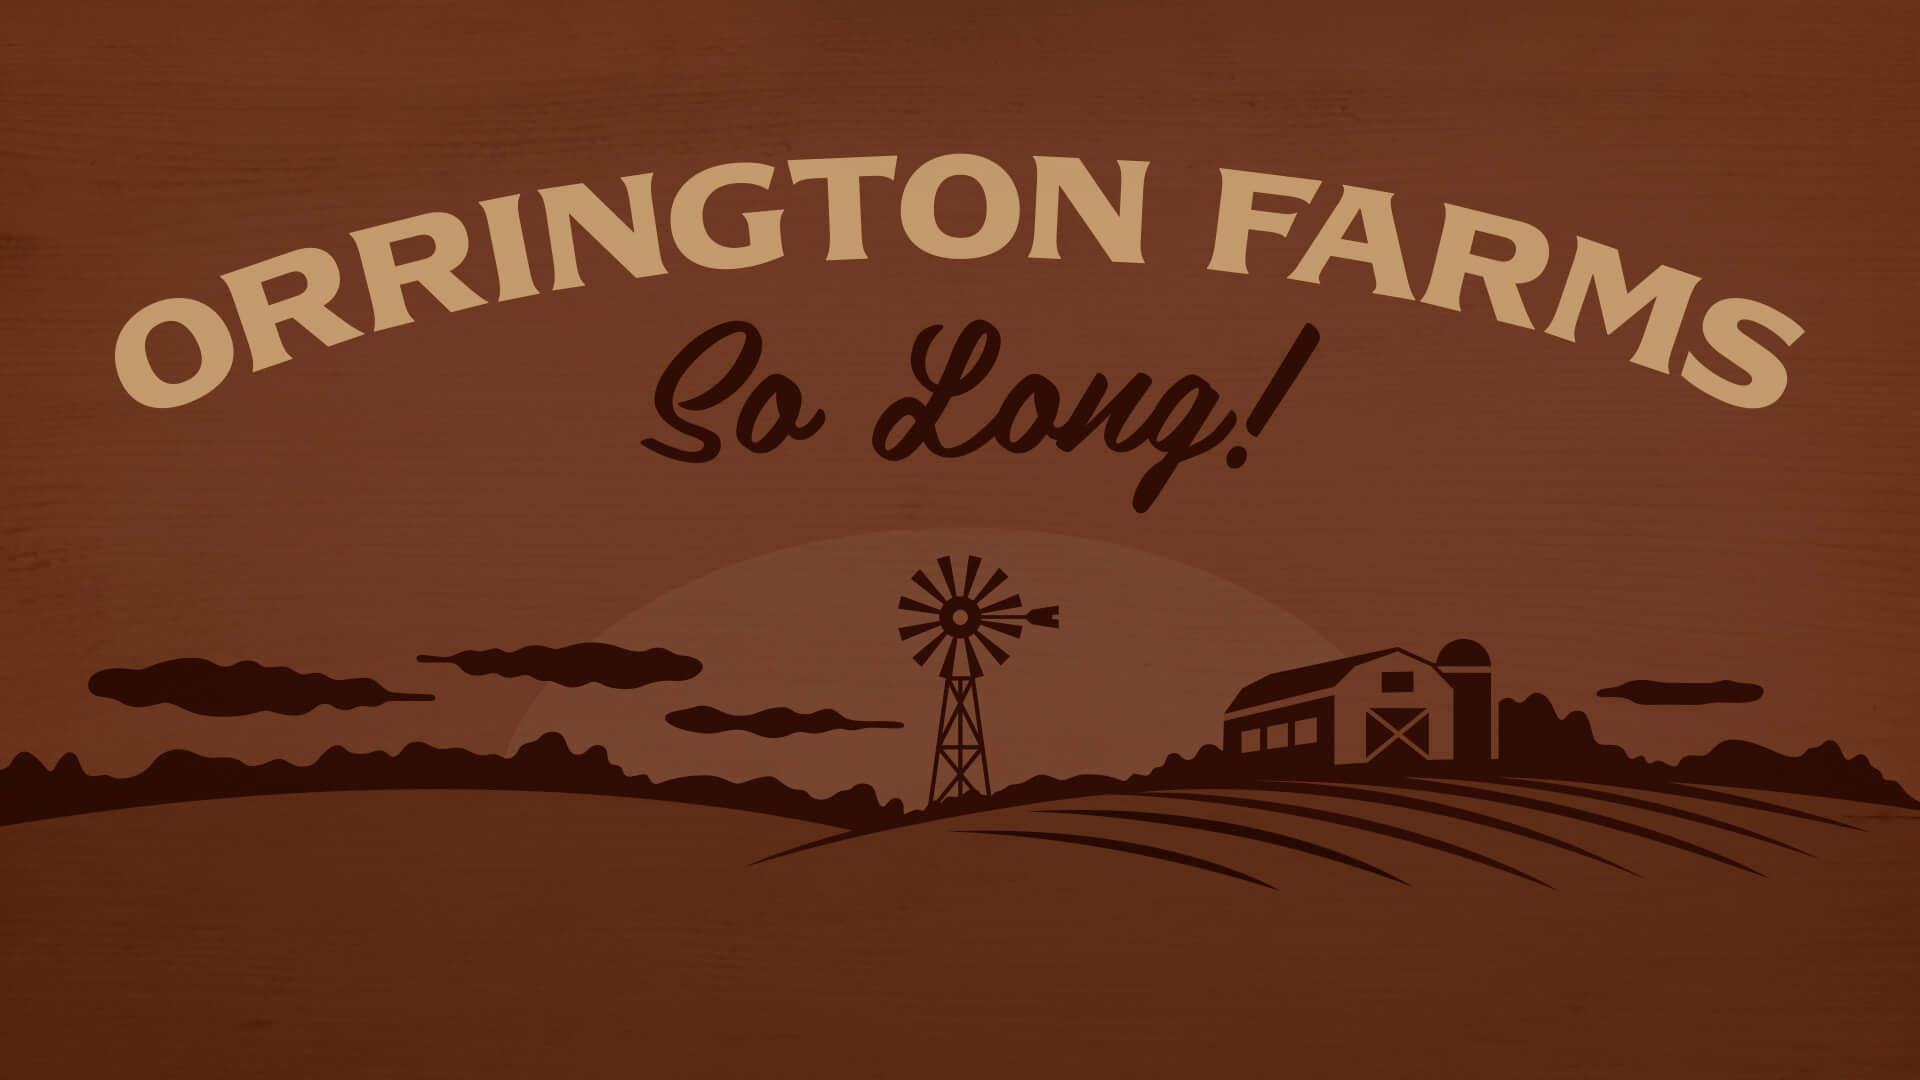 Orrington Farms – So long! Sign Off Windmill Barn & Silo Scene